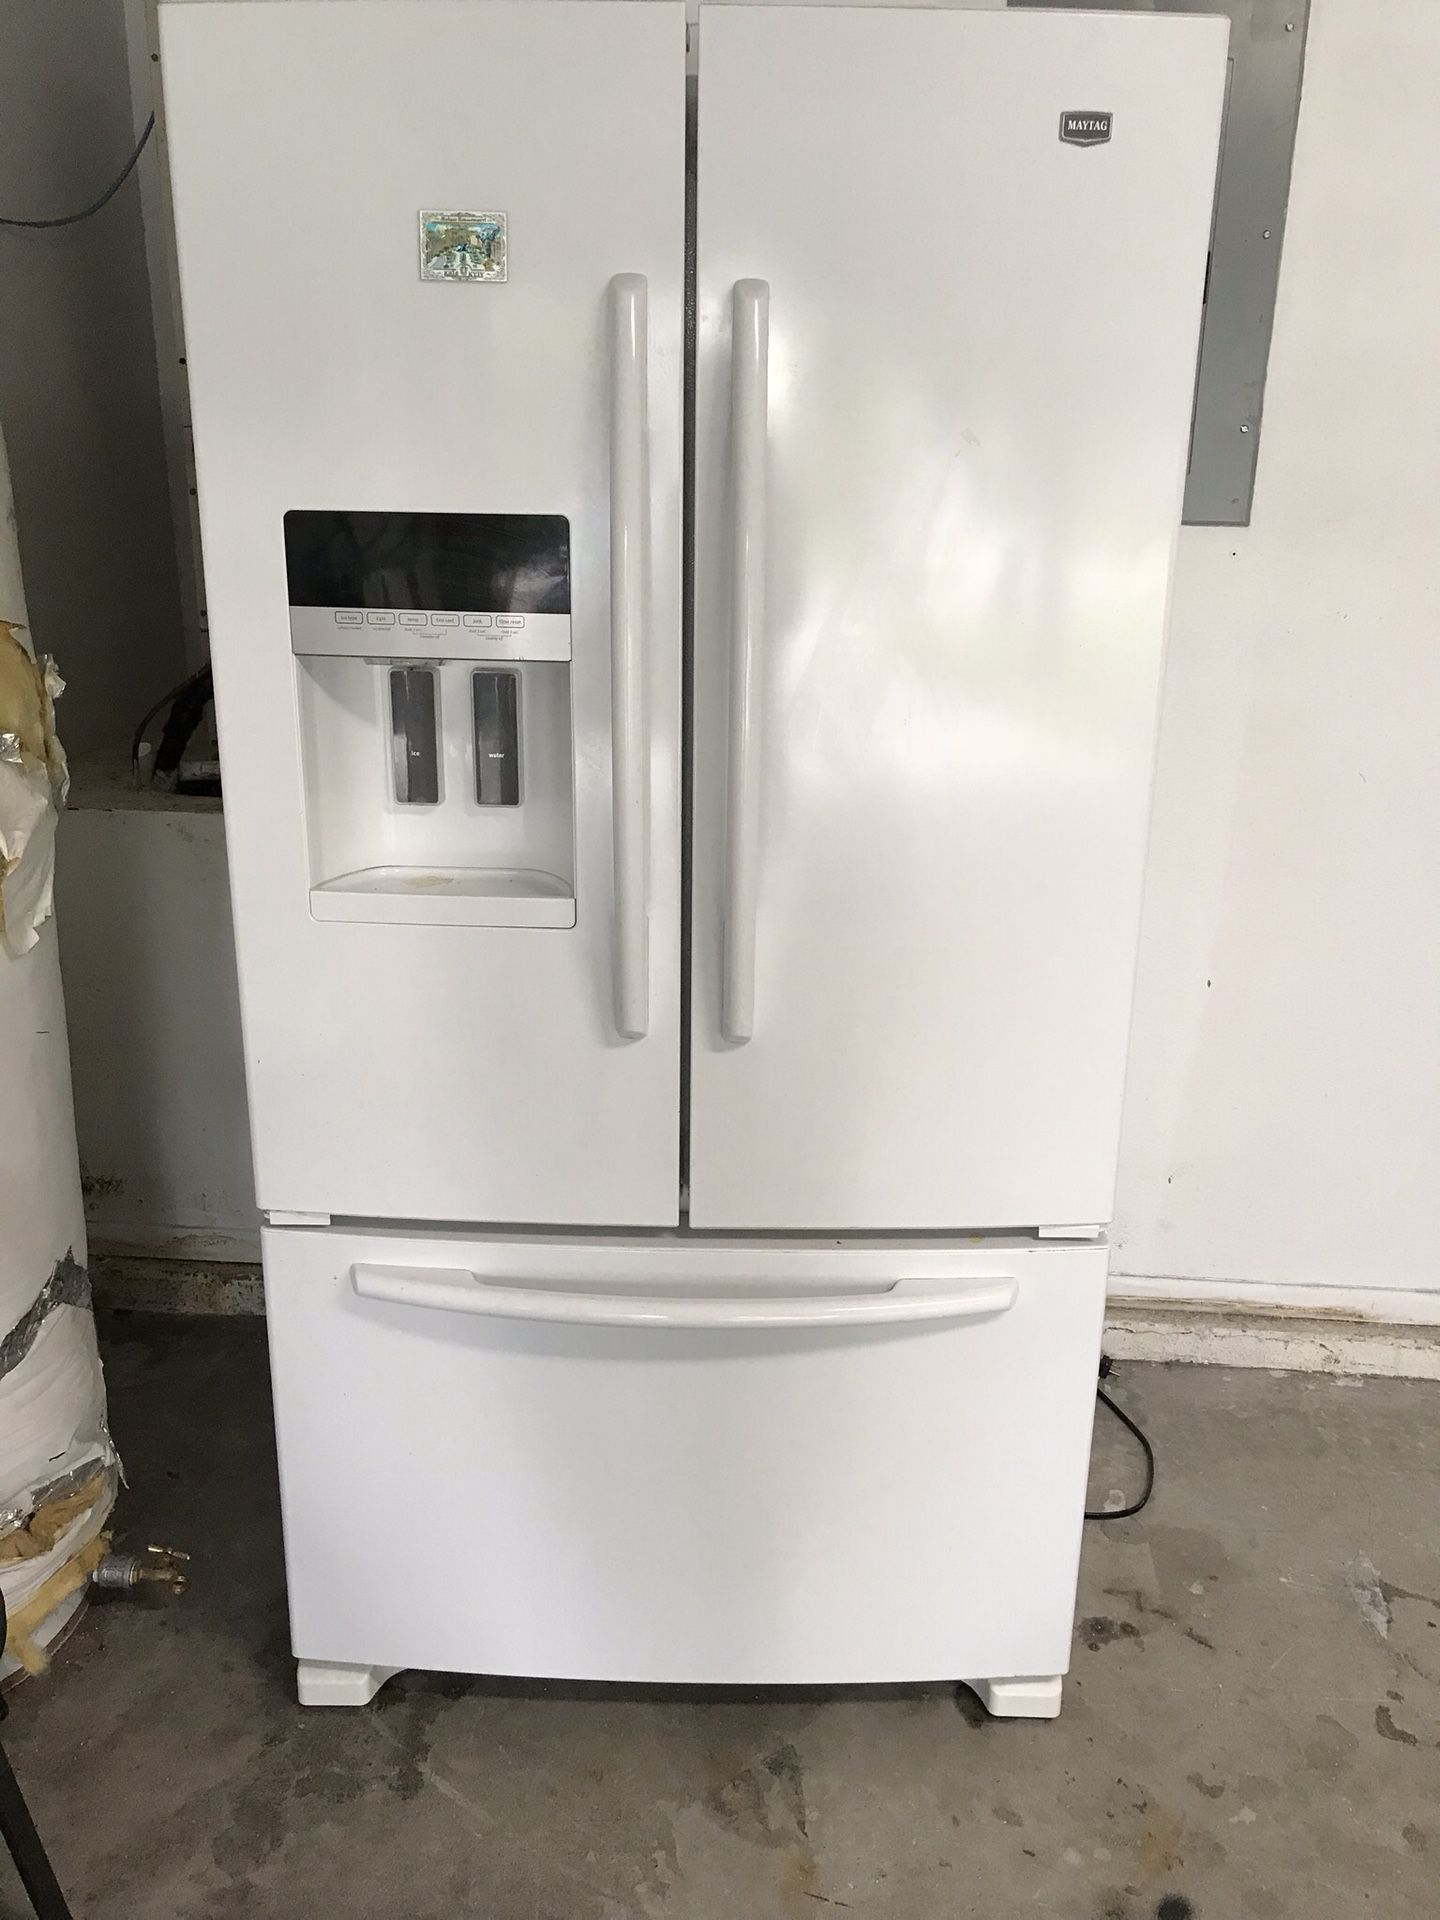 Maytag refrigerator with ice machine